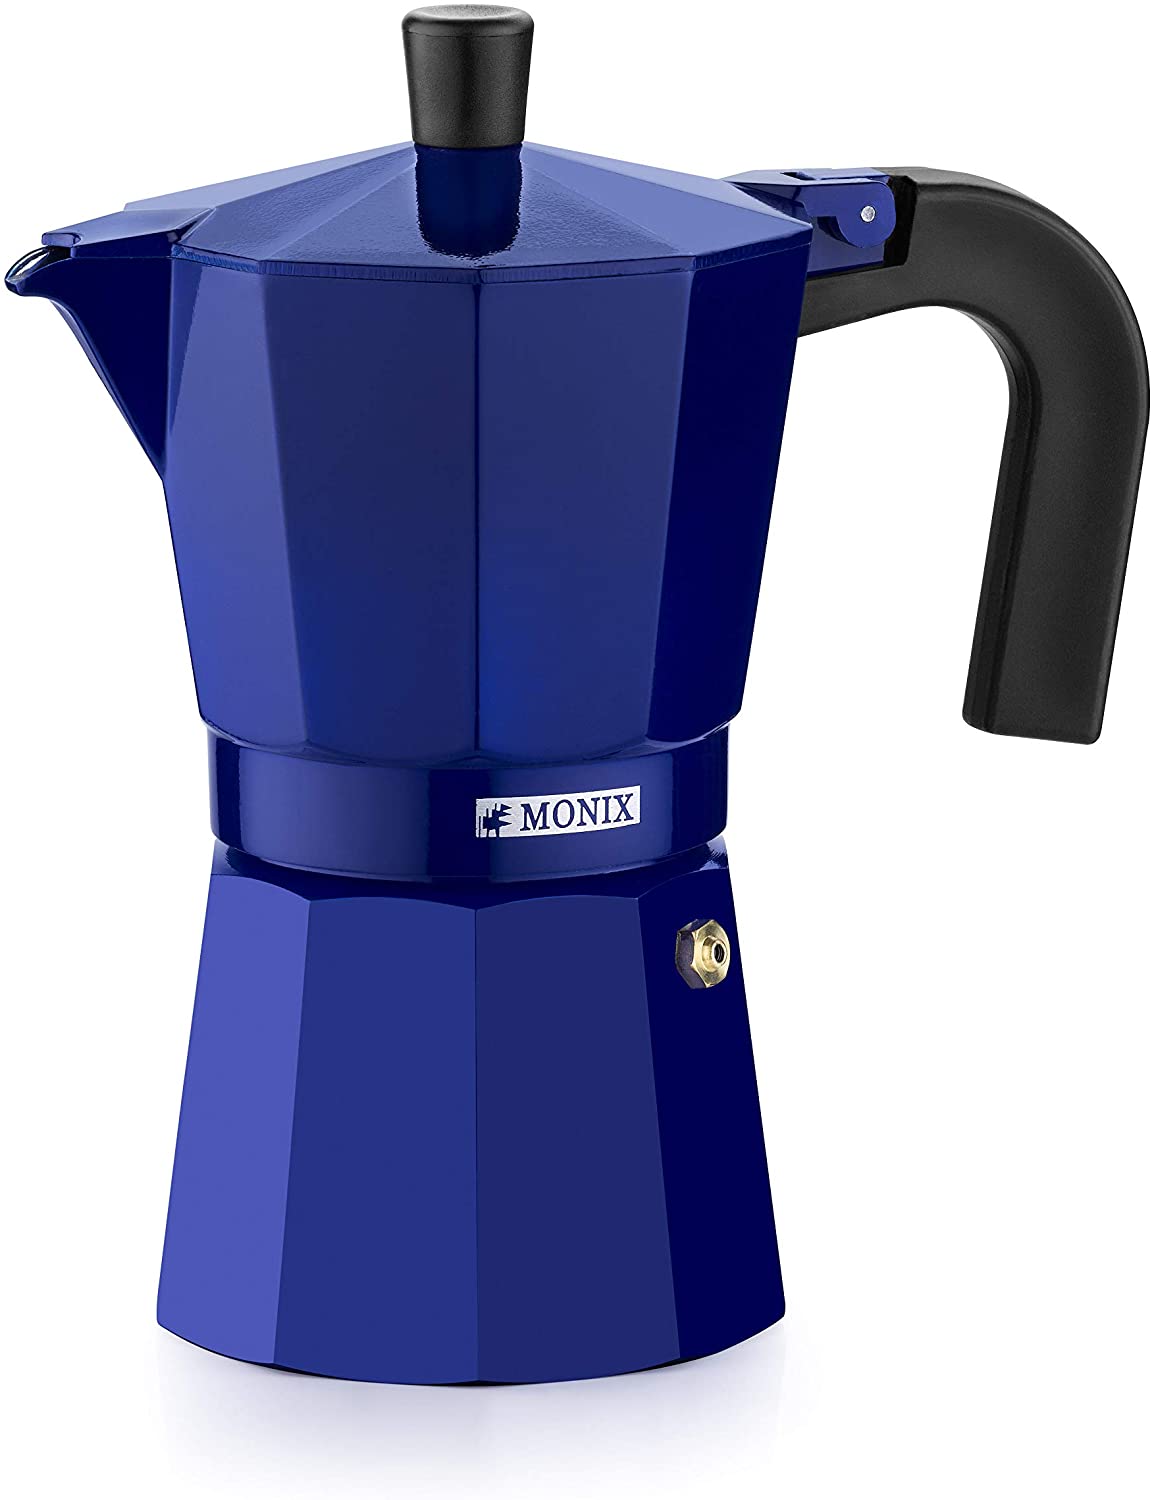 Monix Cobalto 6 cup coffee maker